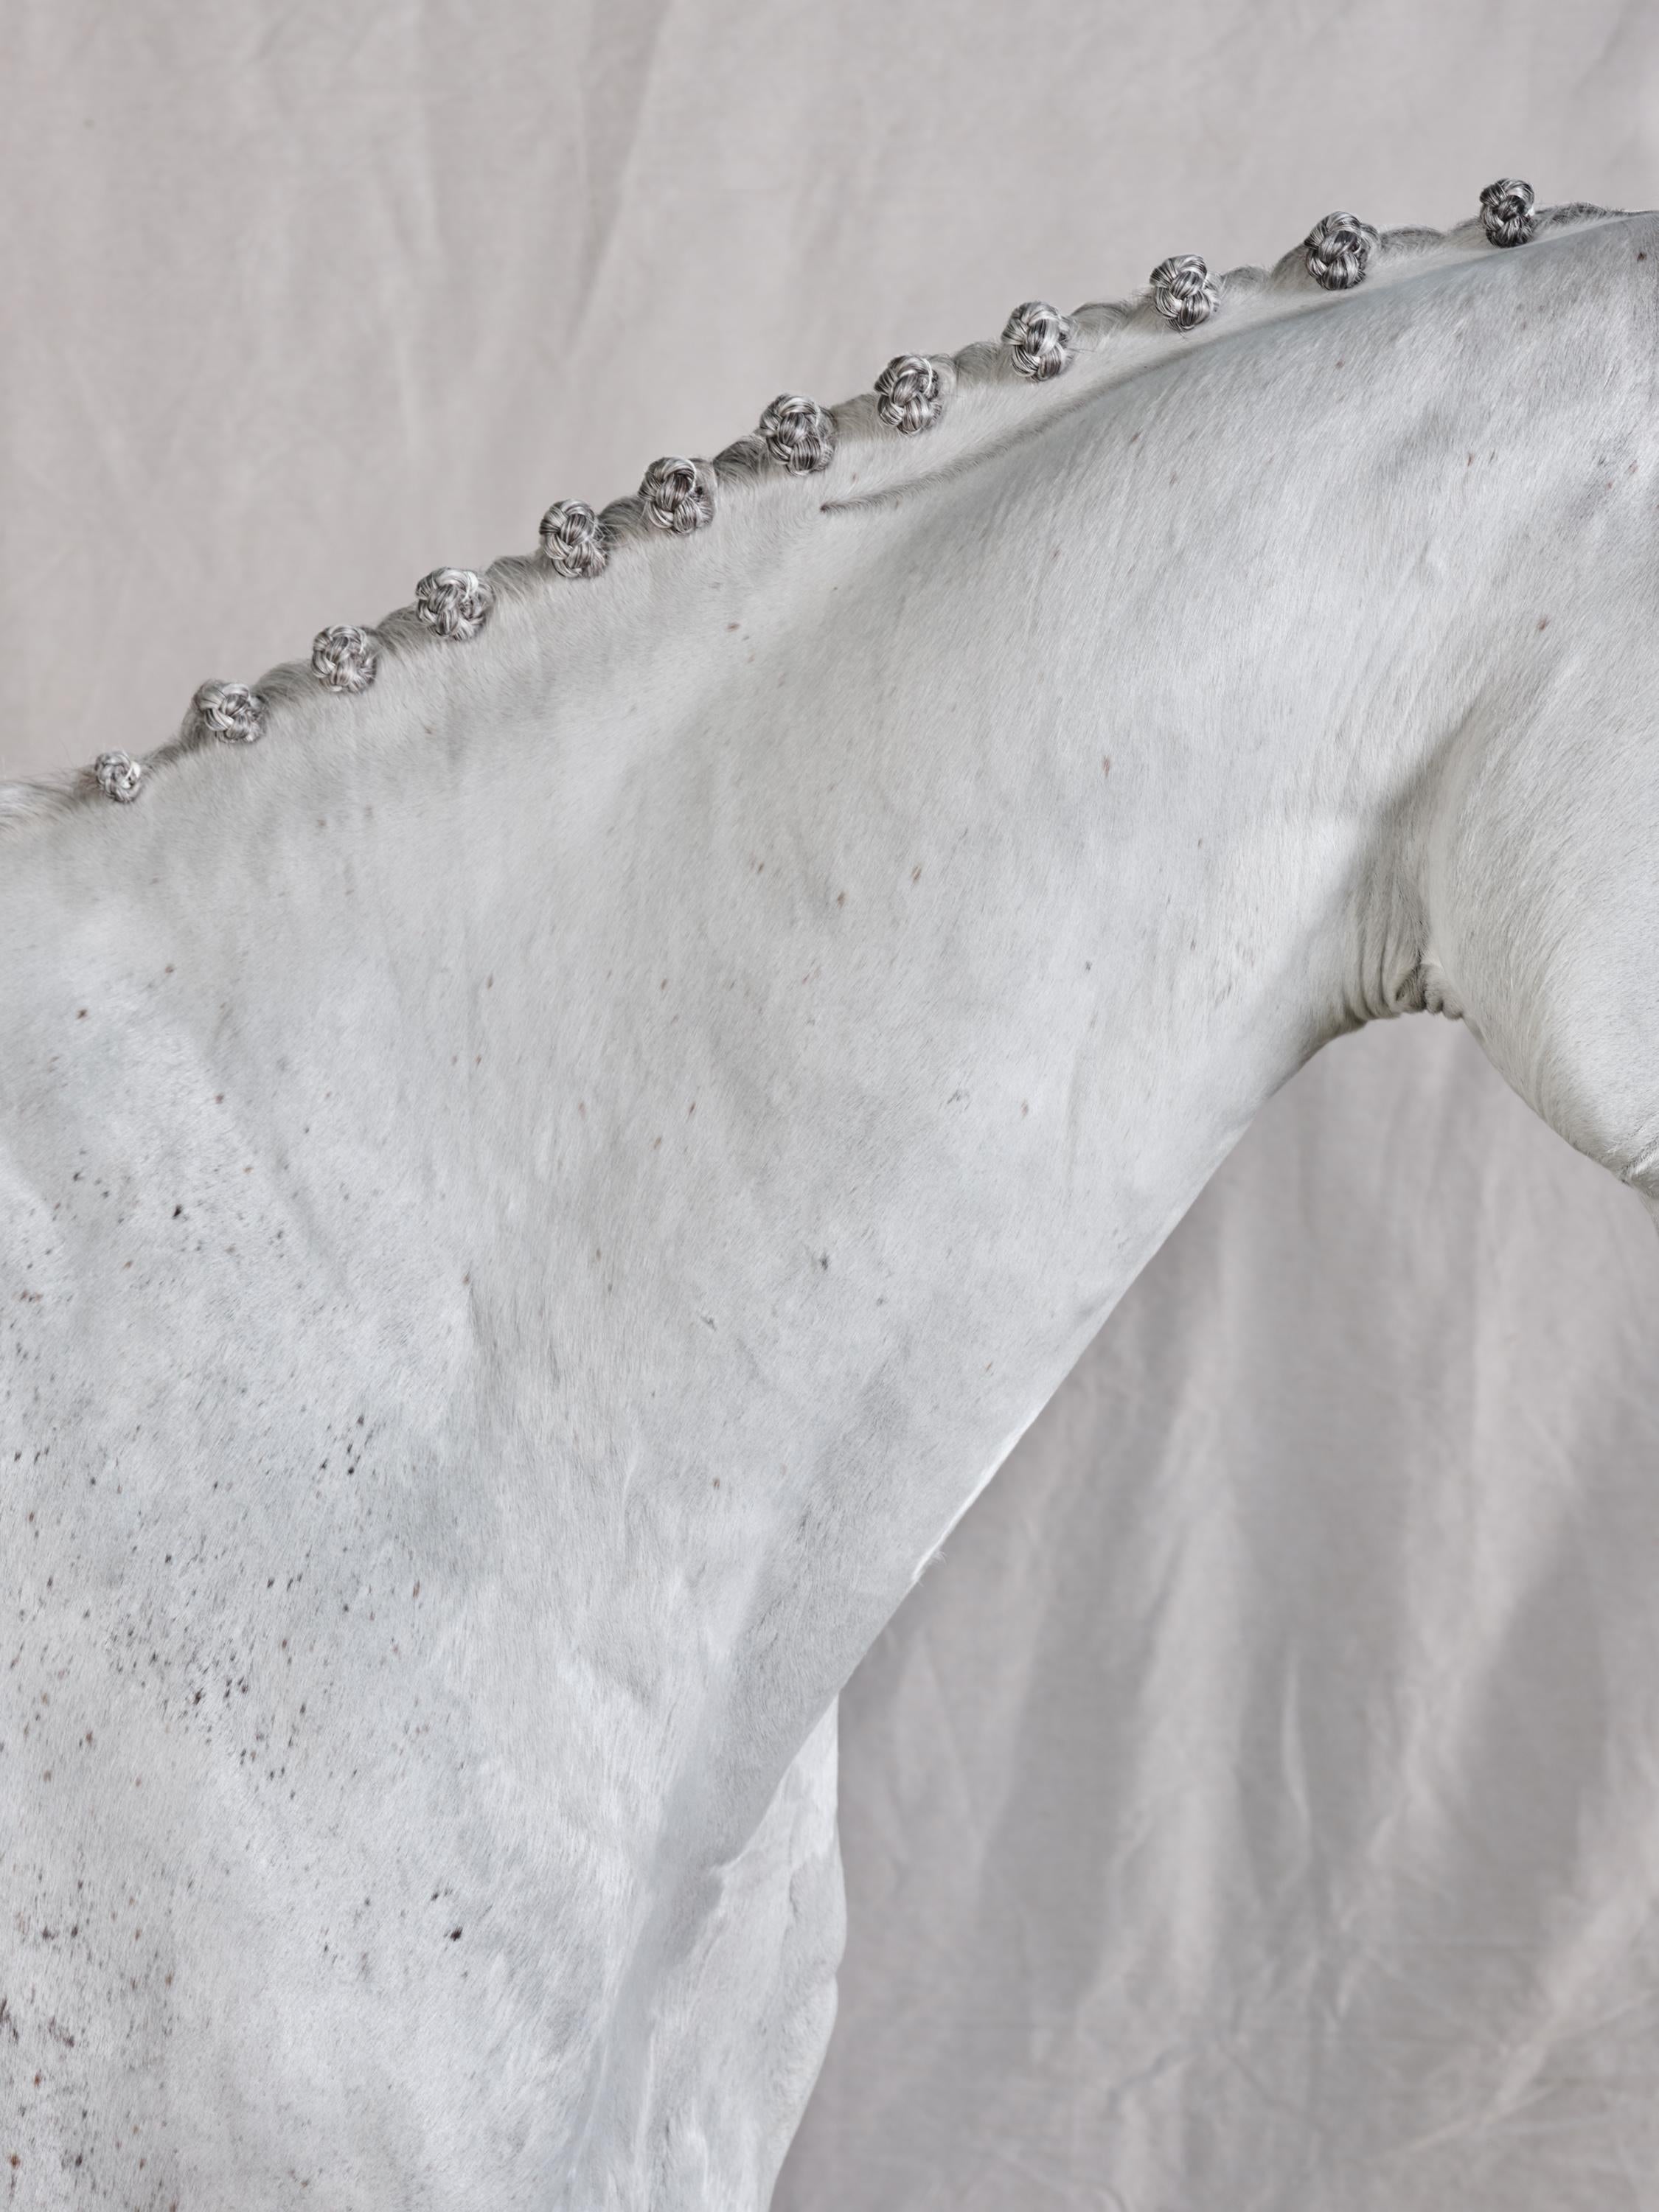 Juan Lamarca Abstract Photograph - Casper on White II - B&W Limited Edition Horse Portrait 2019